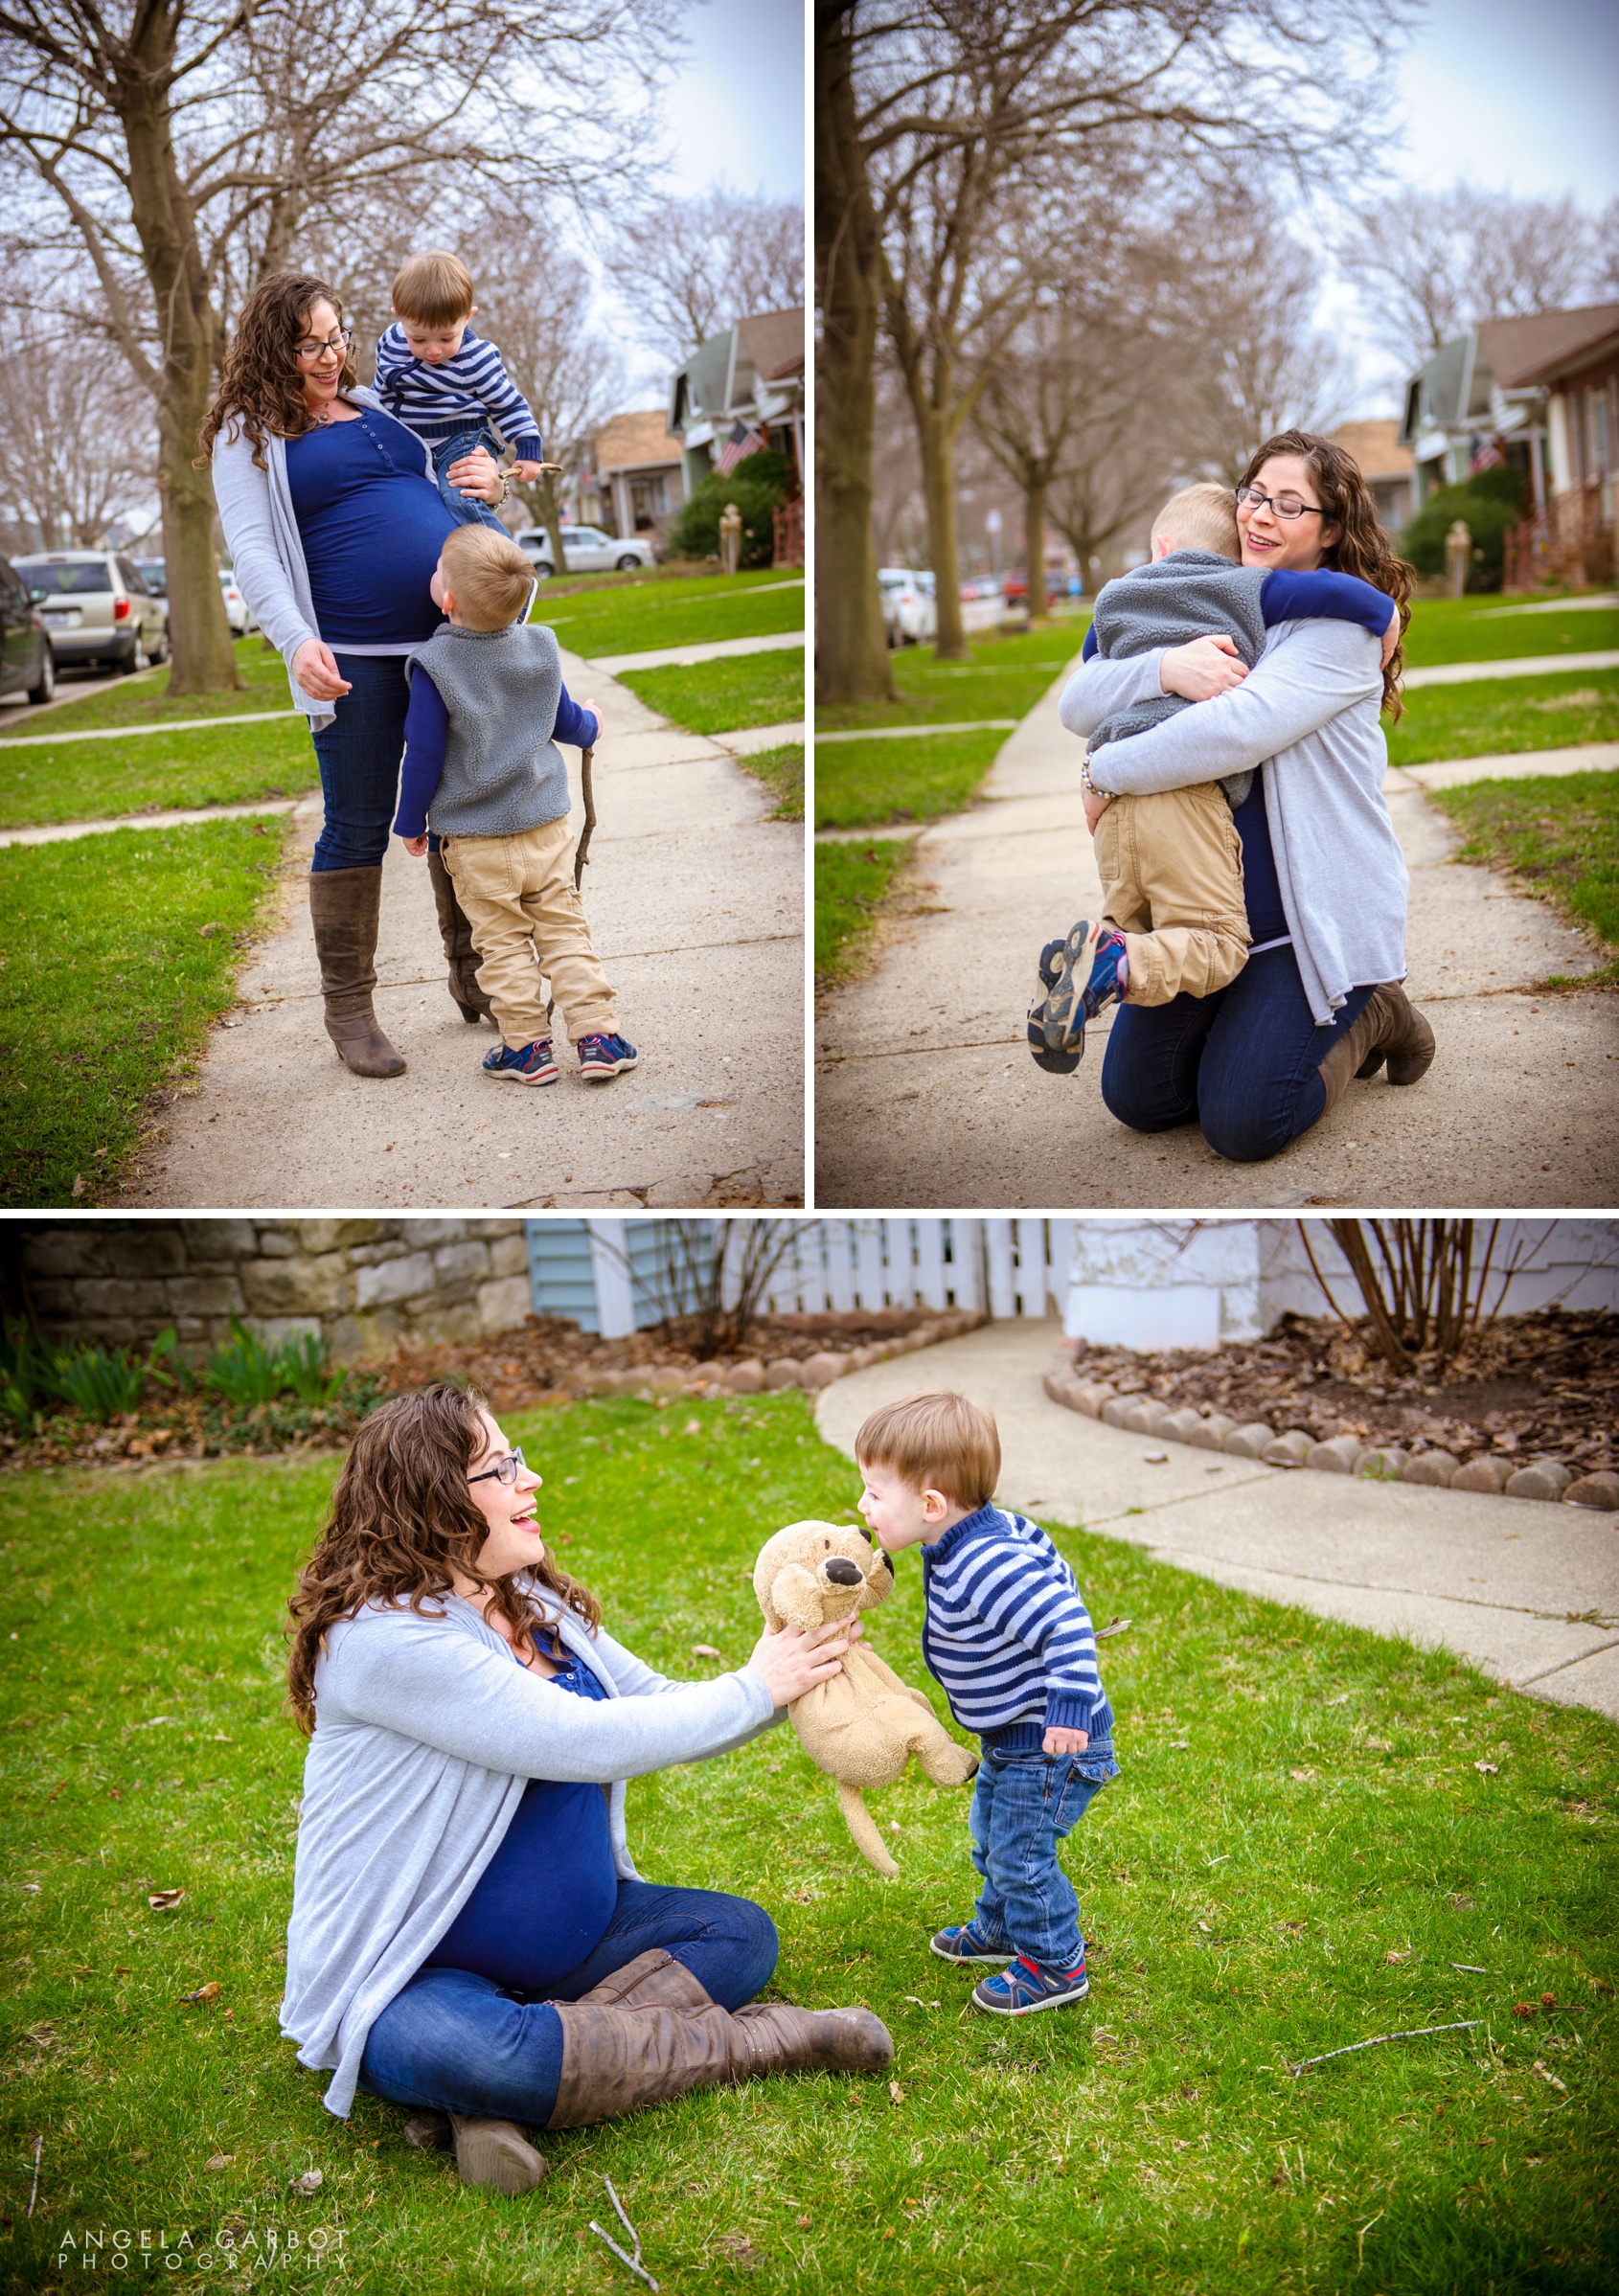 Mother's Day 2016 #charlottemothersday #chicagomothersday #mothersday #lifestylefamilyphotography #charlottefamily #chicagofamily ©2016 Angela Garbot http://www.AngelaGarbot.com